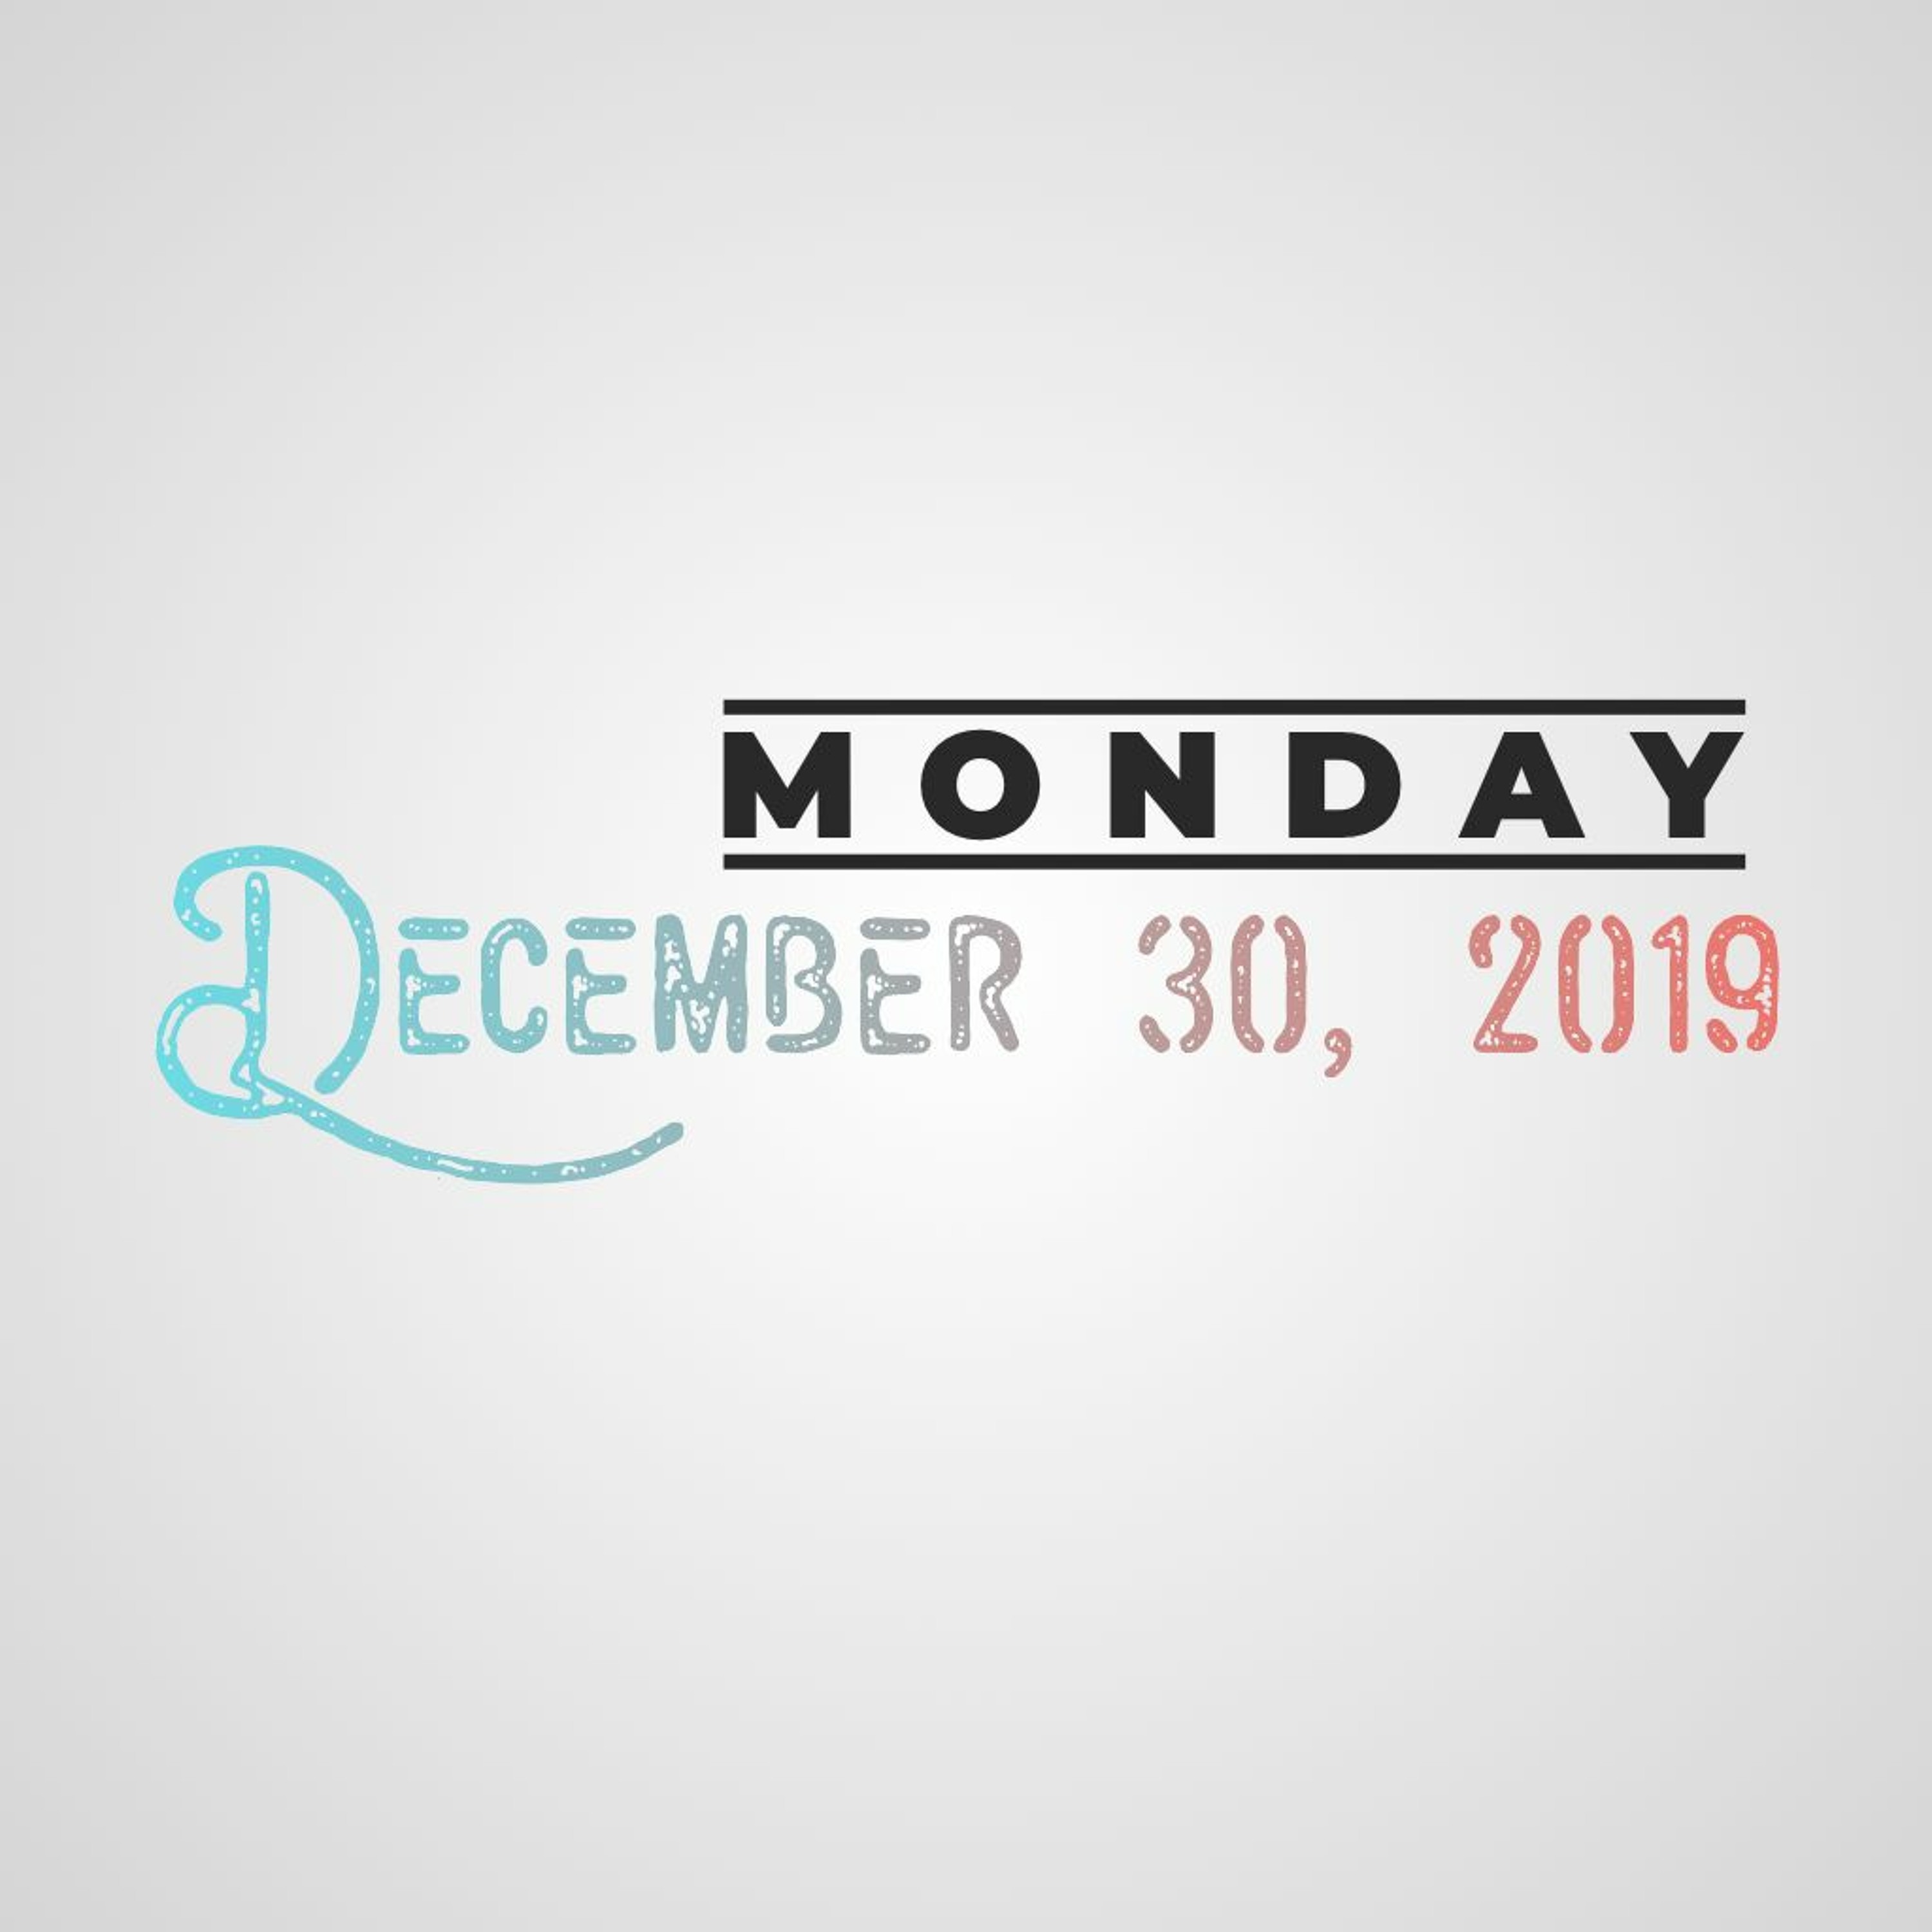 Monday, December 30, 2019